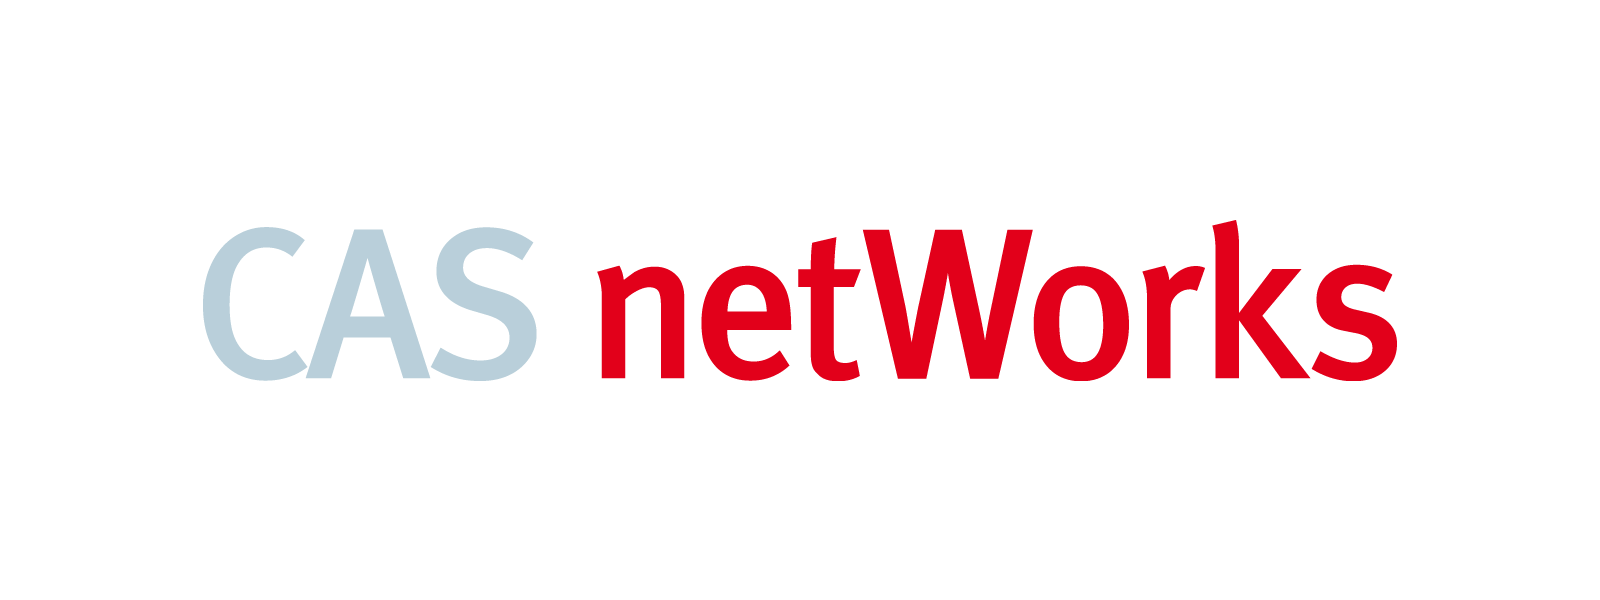 cas_networks-1